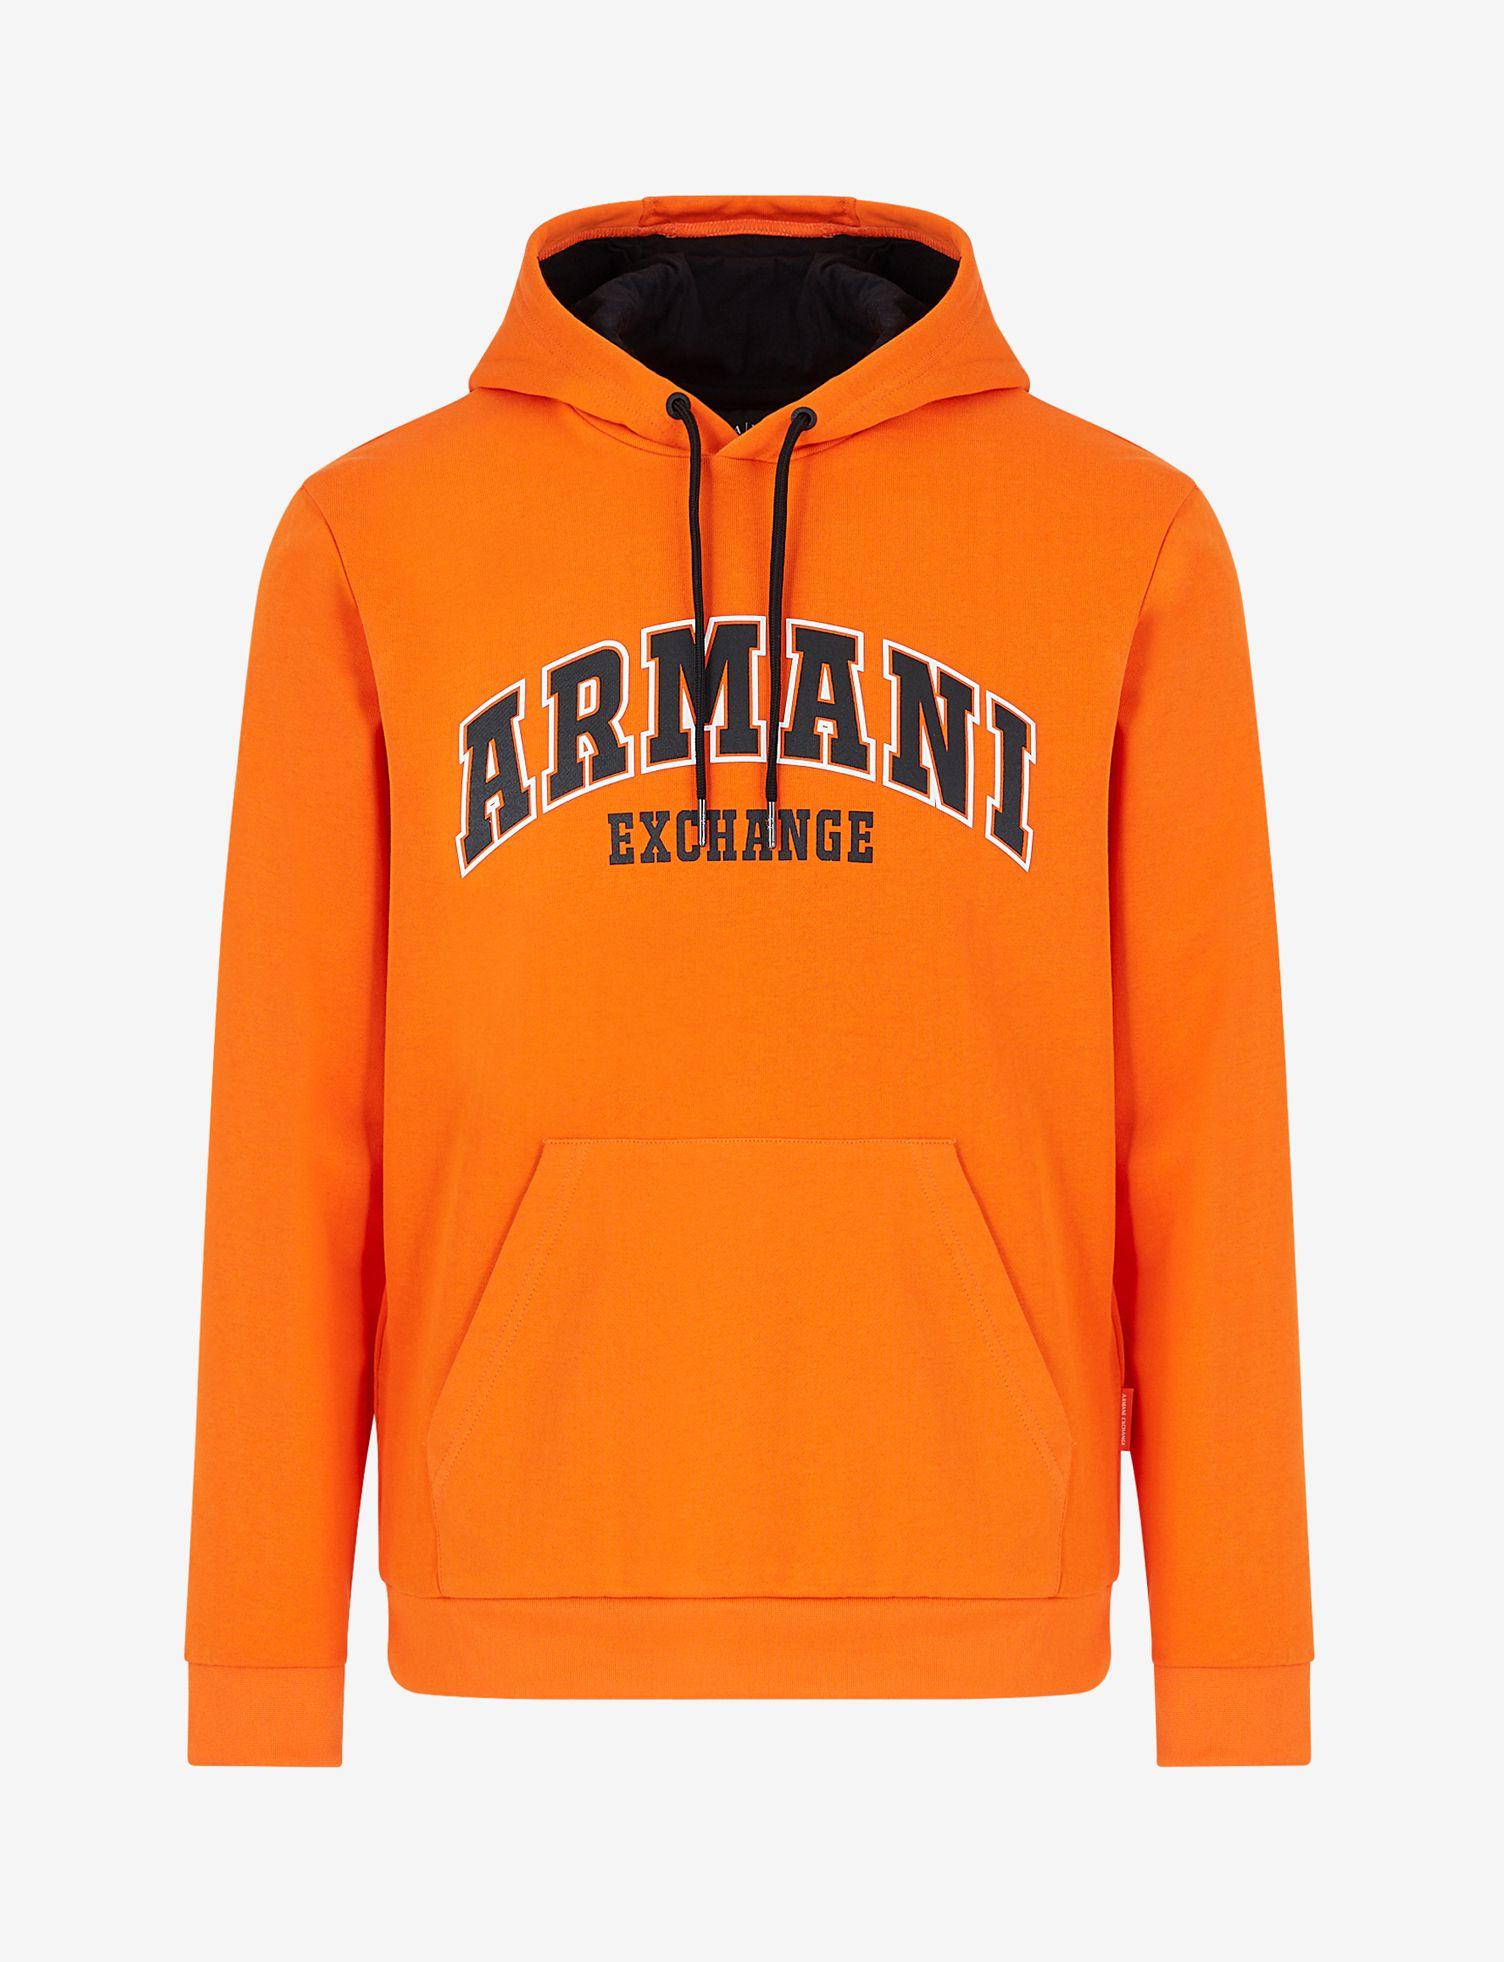 armani exchange orange